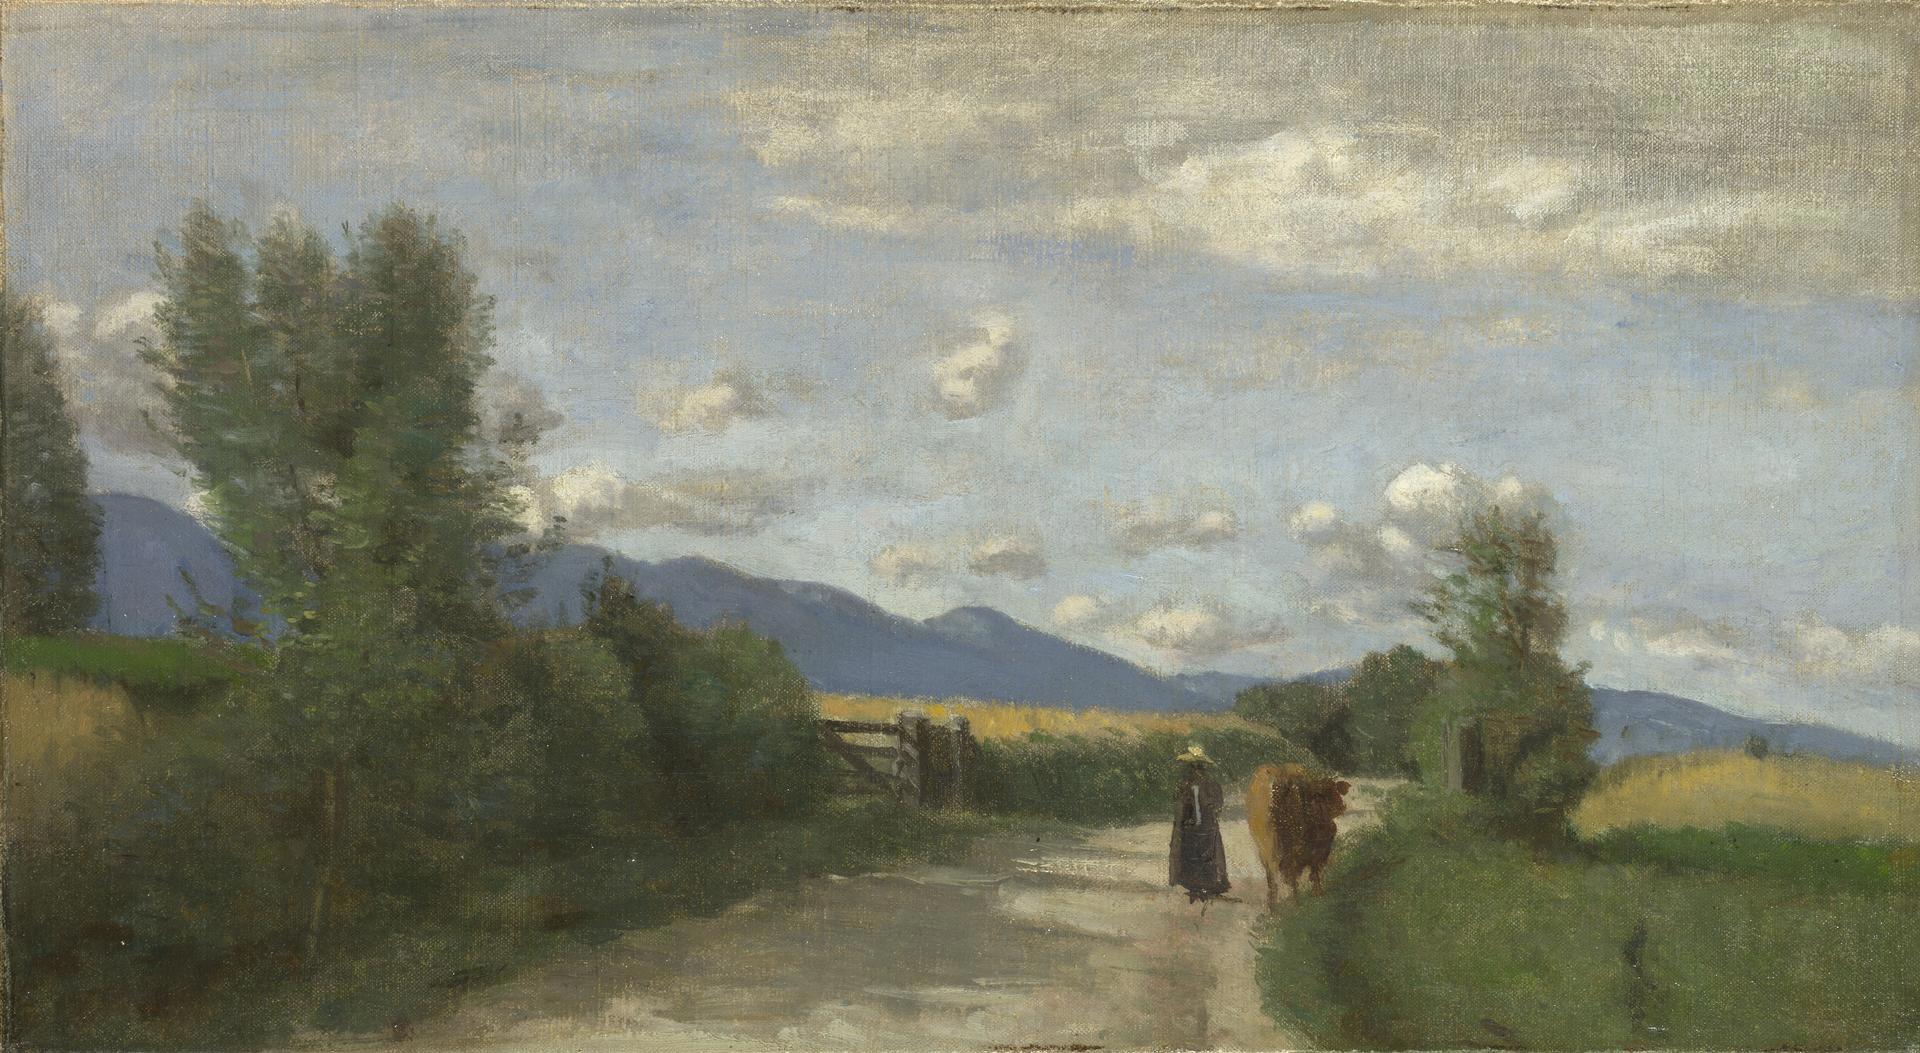 Dardagny, Morning by Jean-Baptiste-Camille Corot